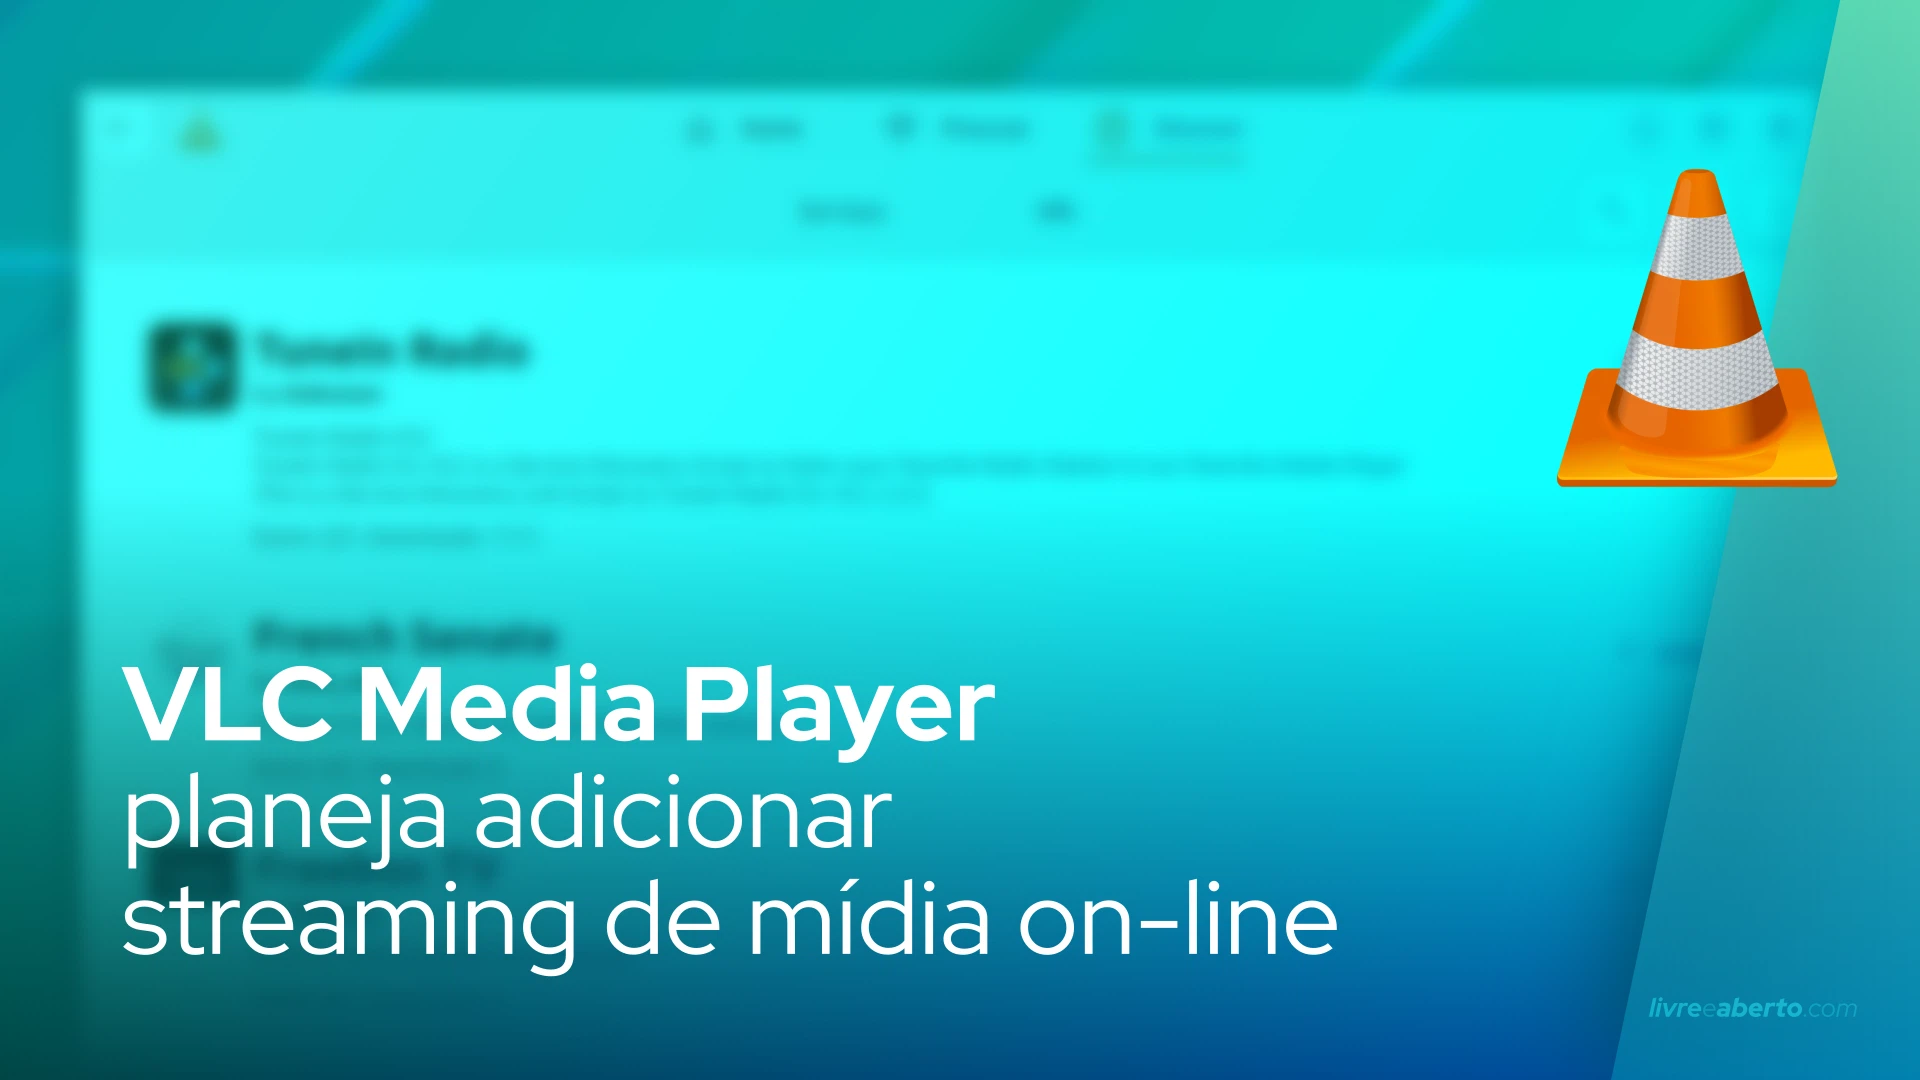 VLC Media Player planeja adicionar streaming de mídia on-line